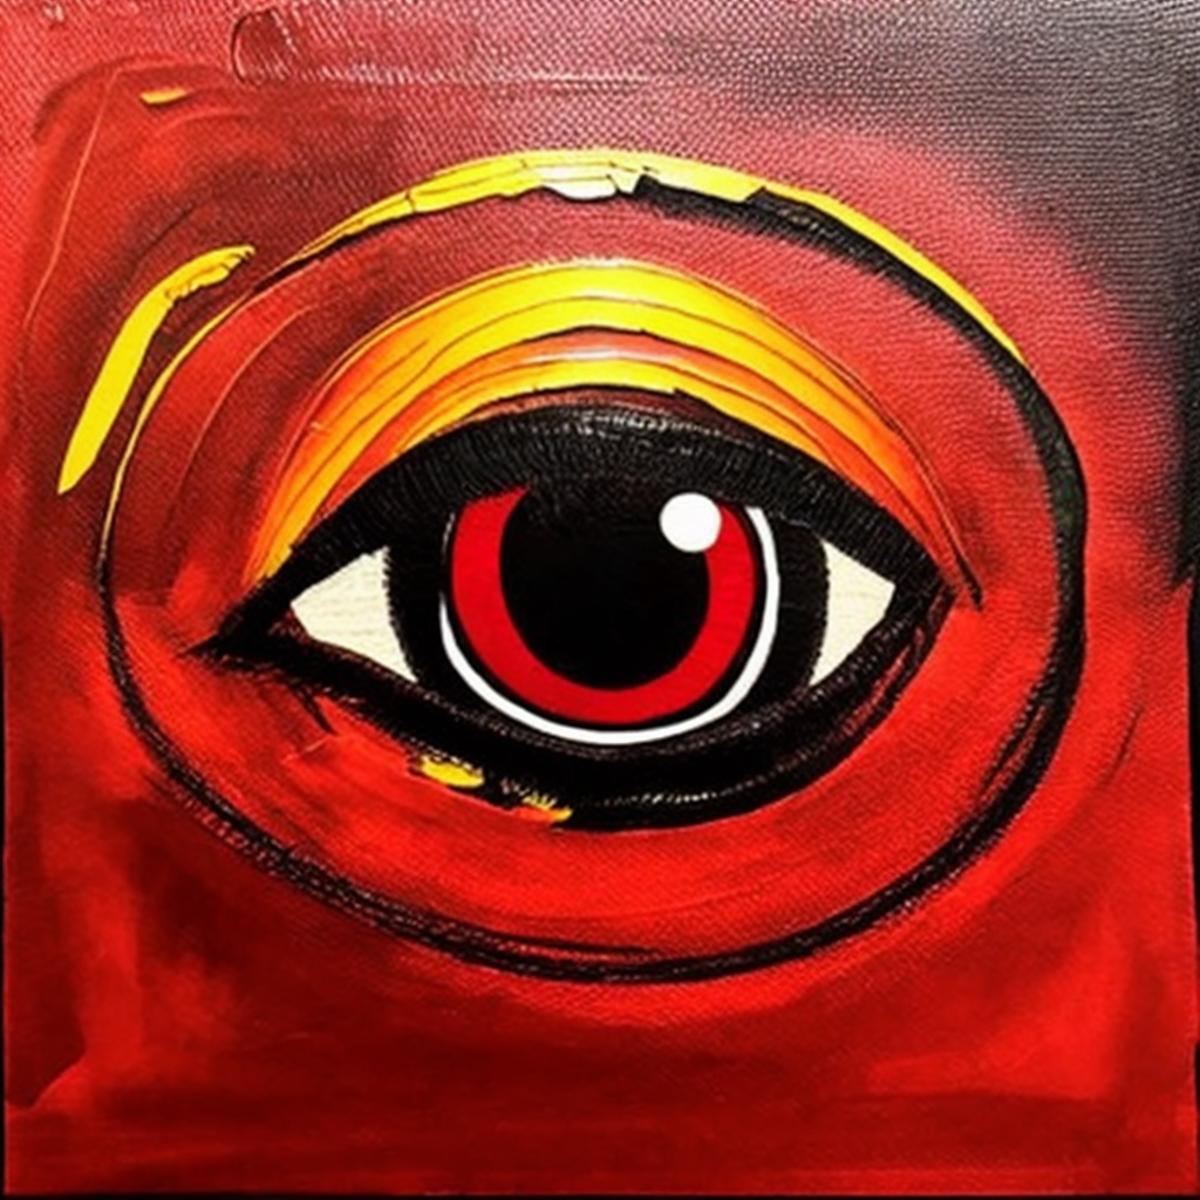 The Eye image by Ciro_Negrogni